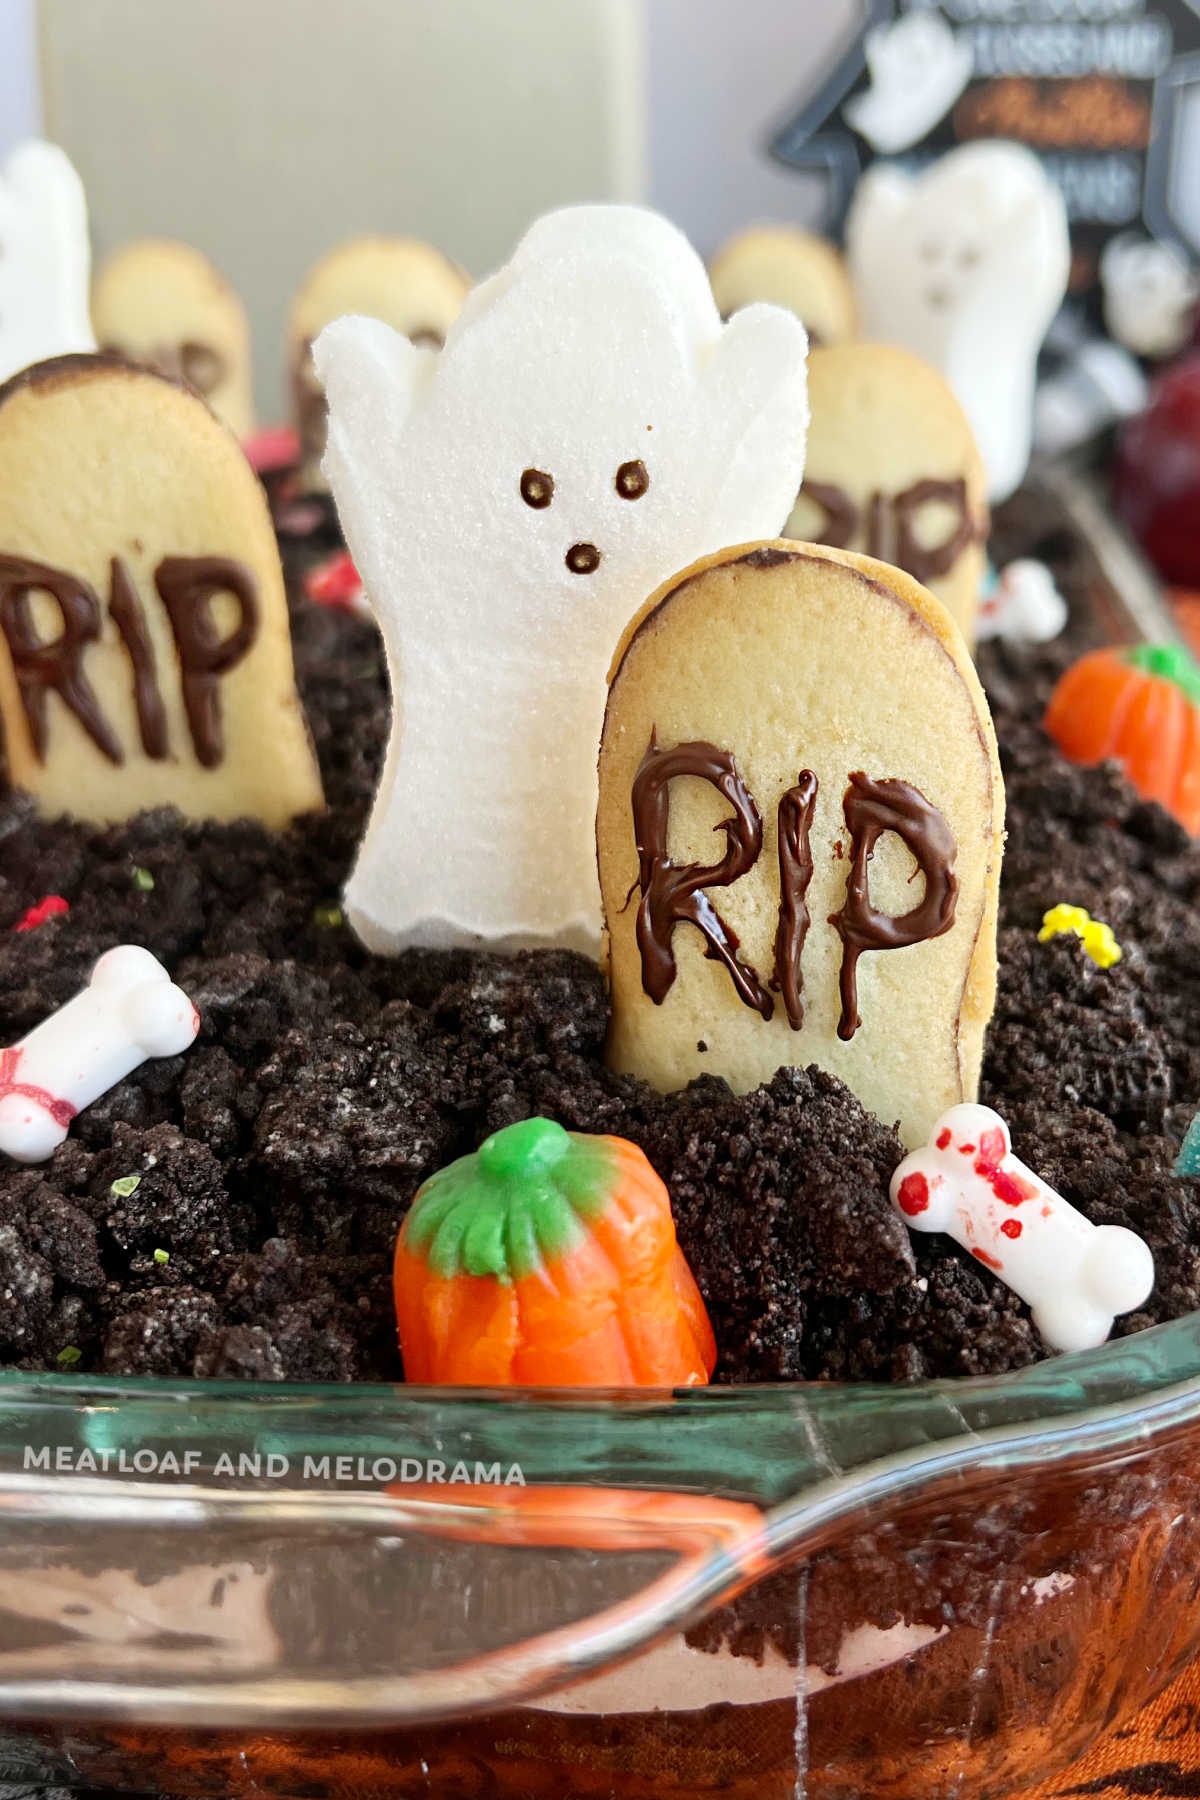 halloween graveyard cake (dirt cake) with ghost, pumpkins and gravestones in pan